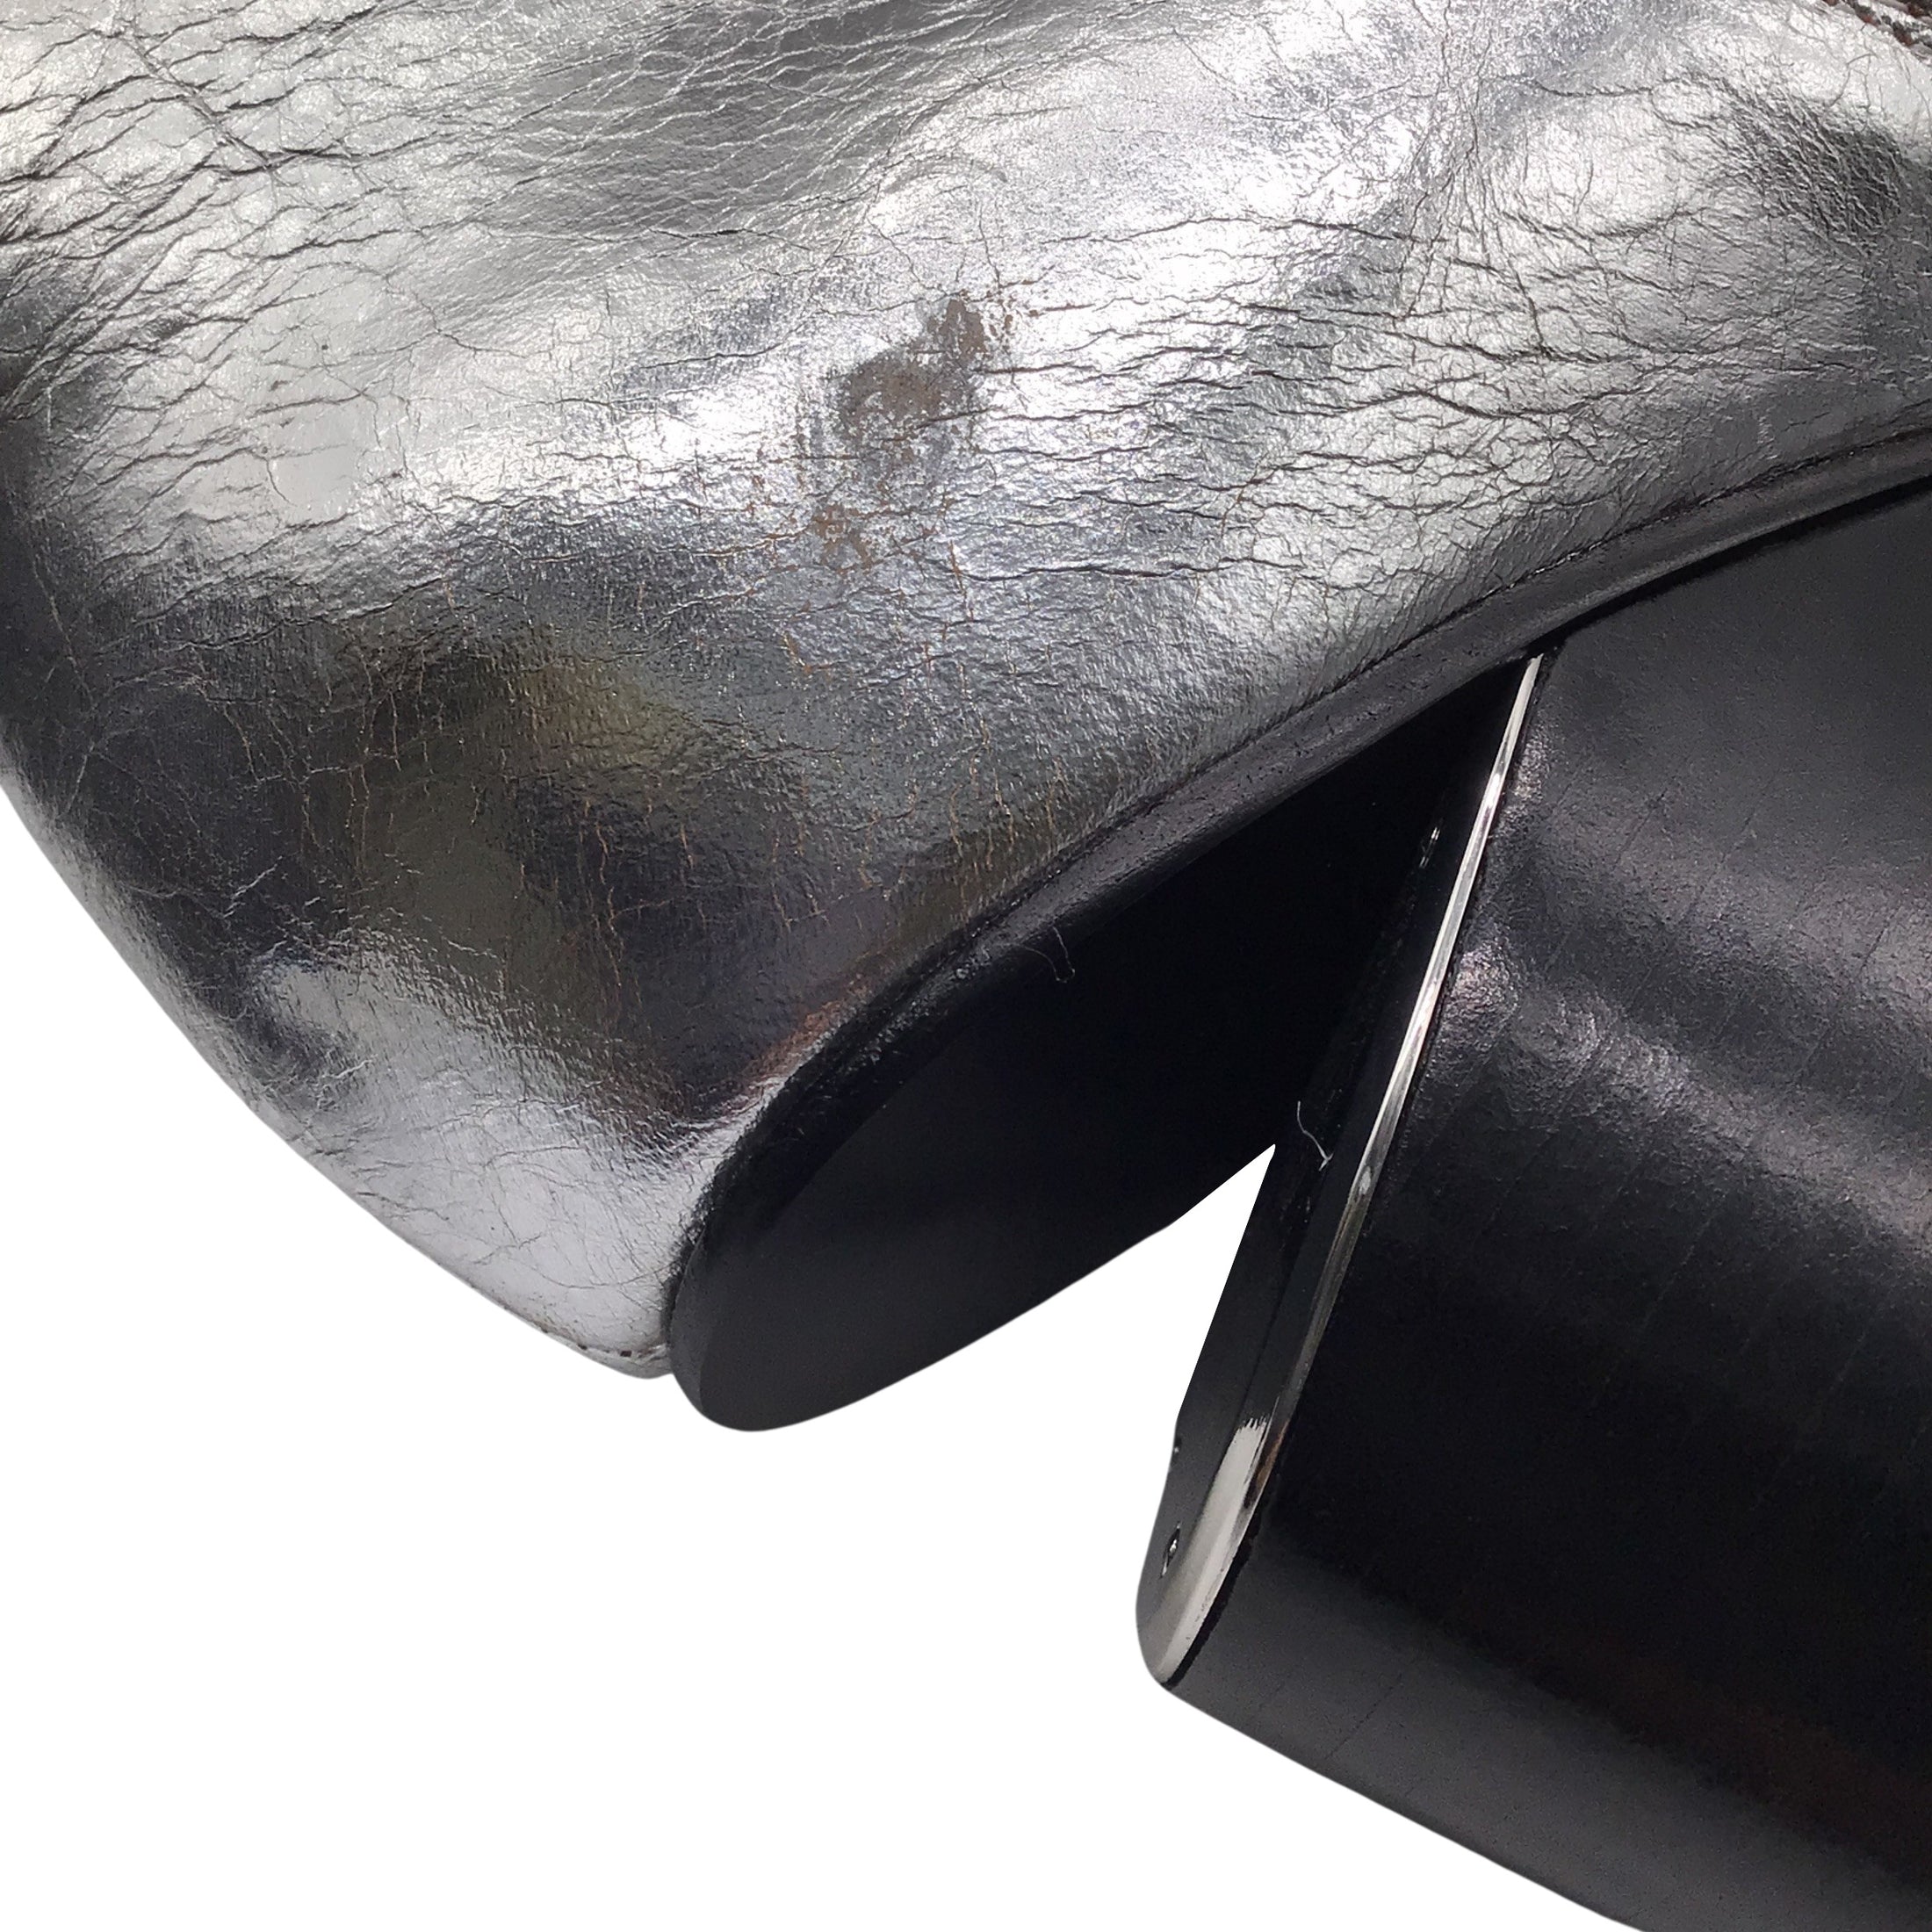 Alexander Wang Gabi Silver Metallic Leather Floating Heel Boots / Booties